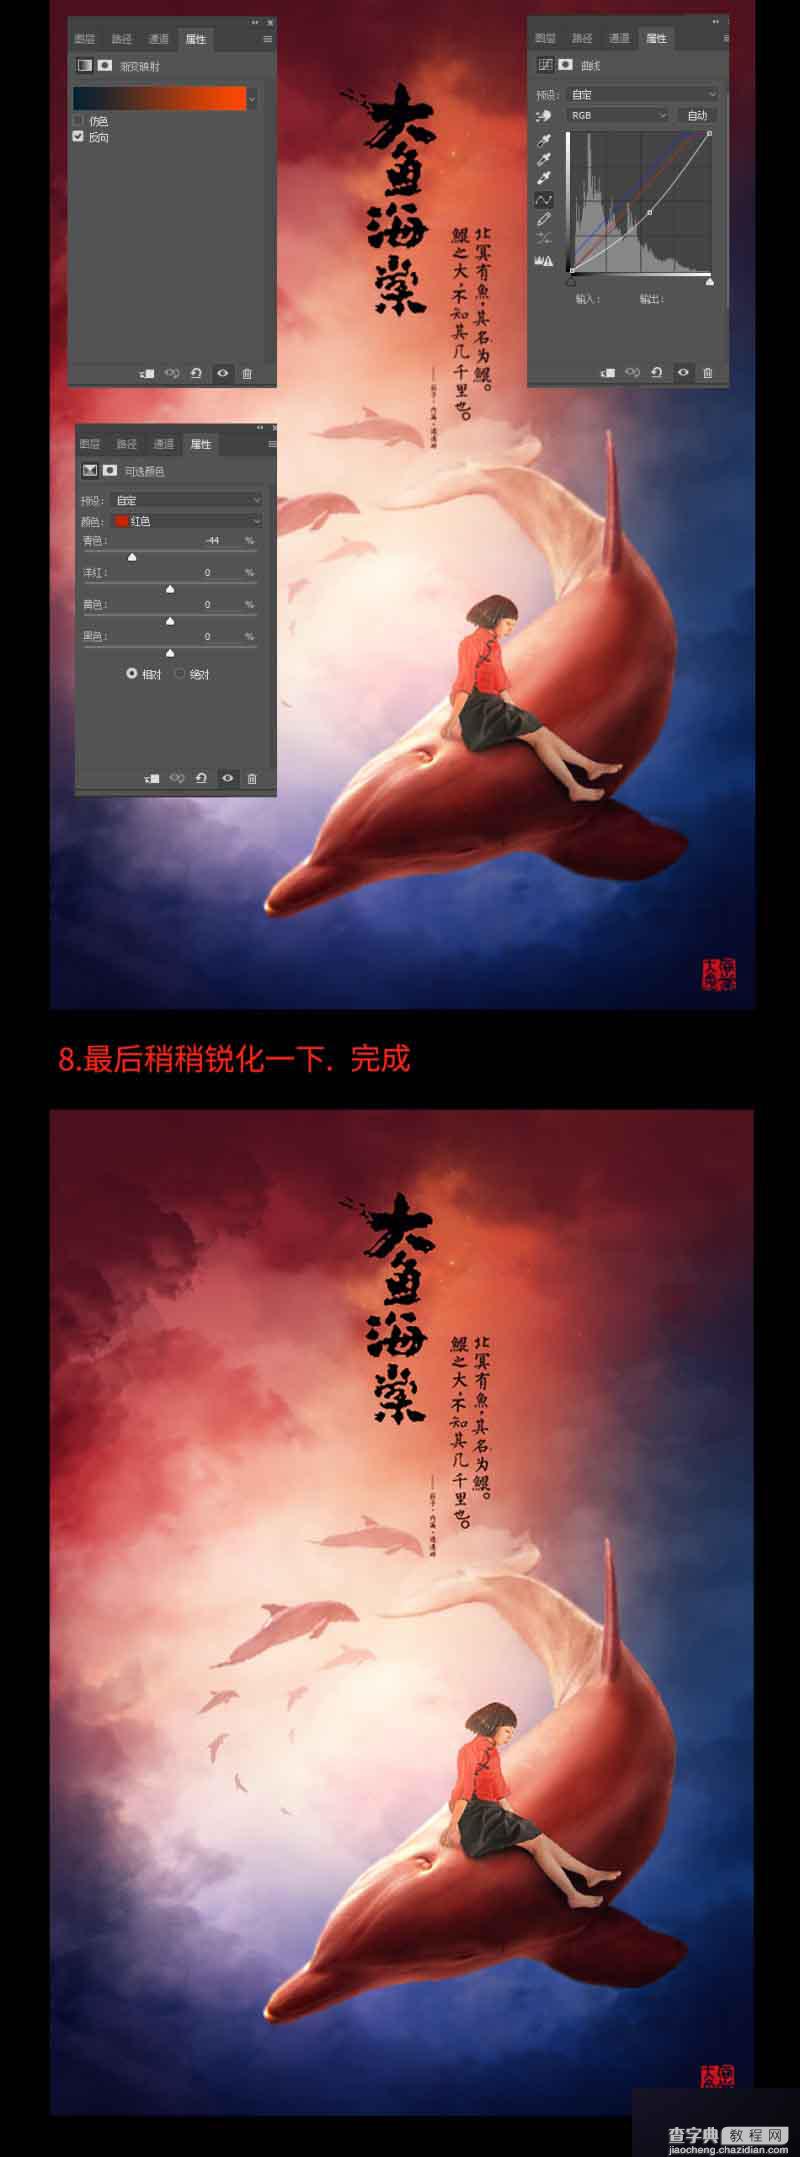 PS合成国产动画大鱼海棠电影海报6